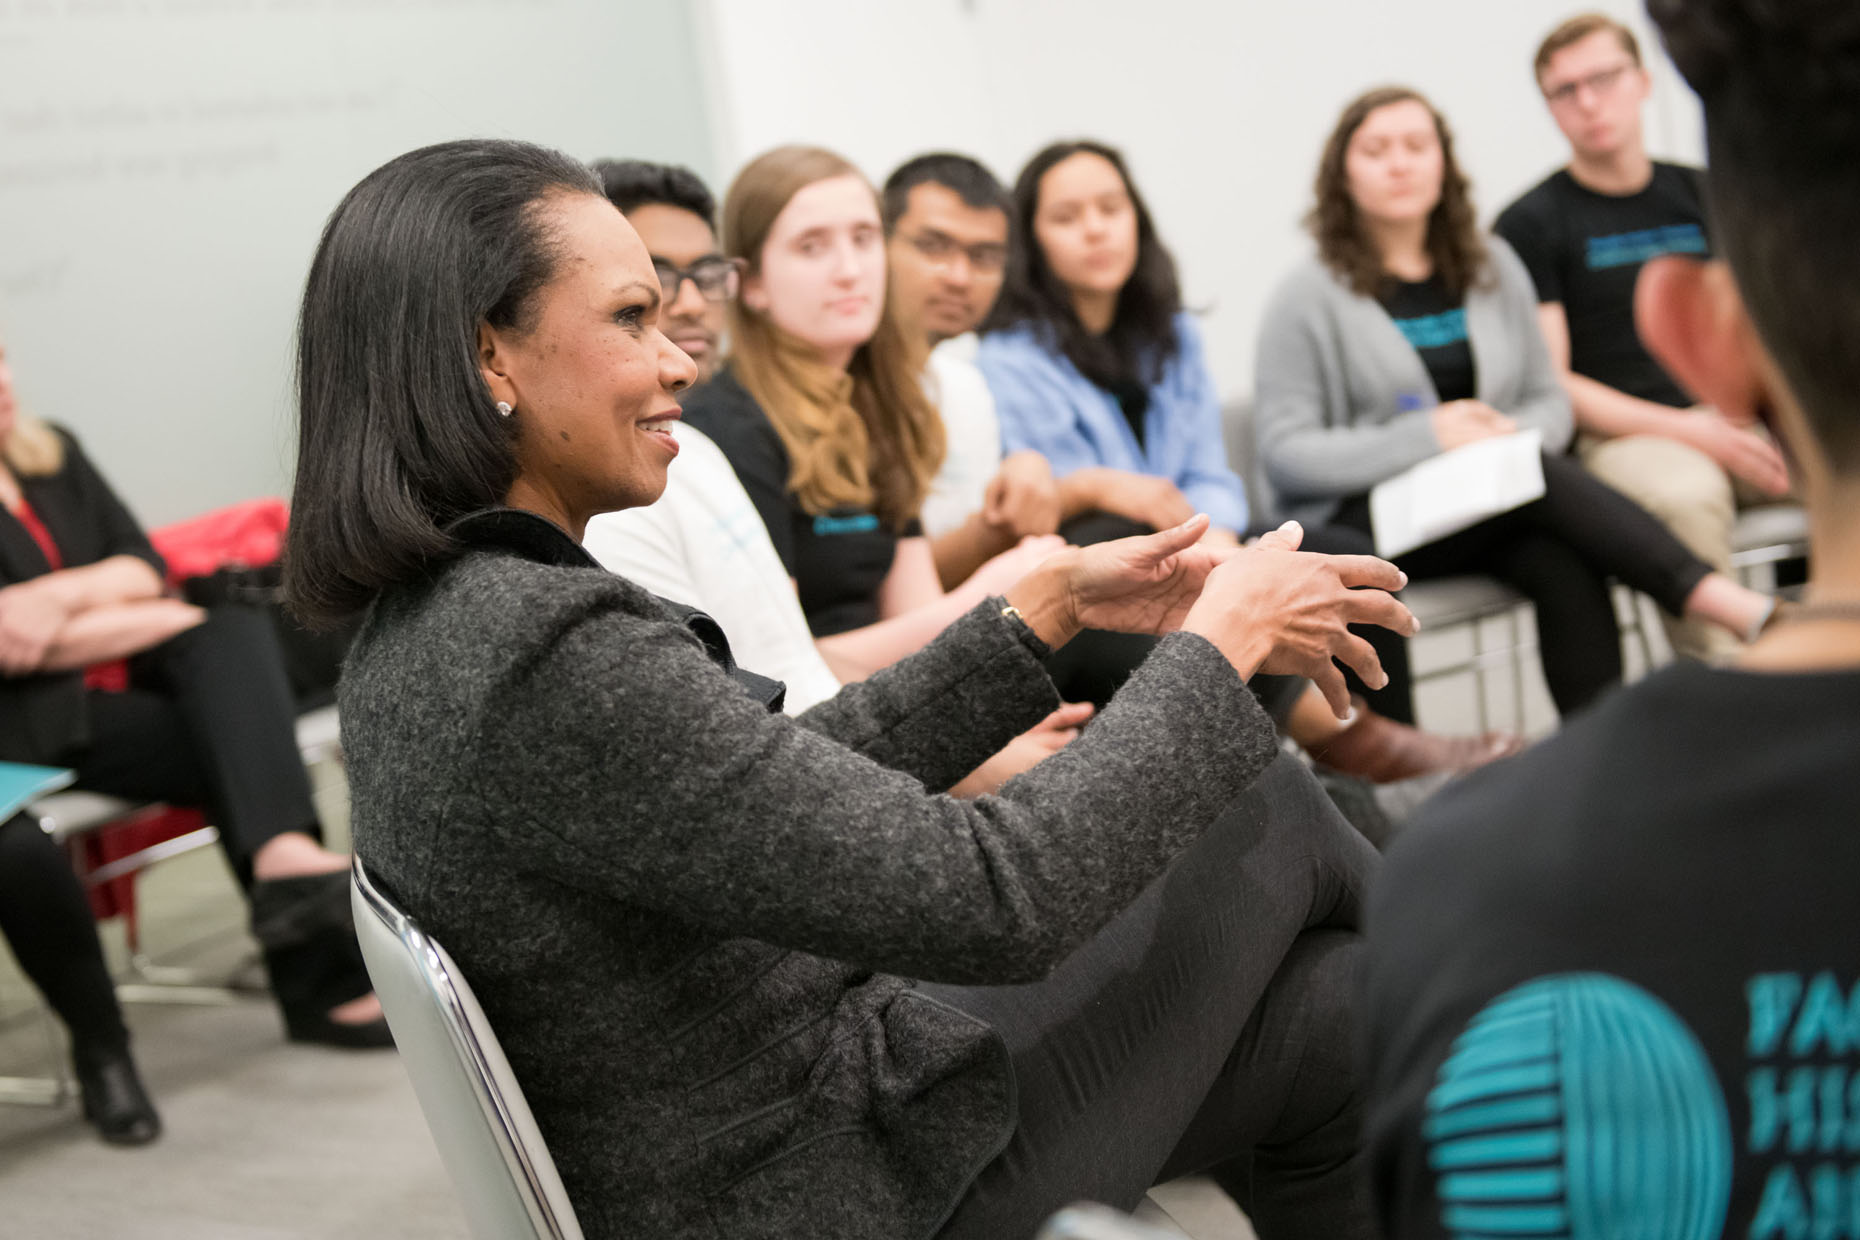 A Community Conversation featuring Condoleezza Rice